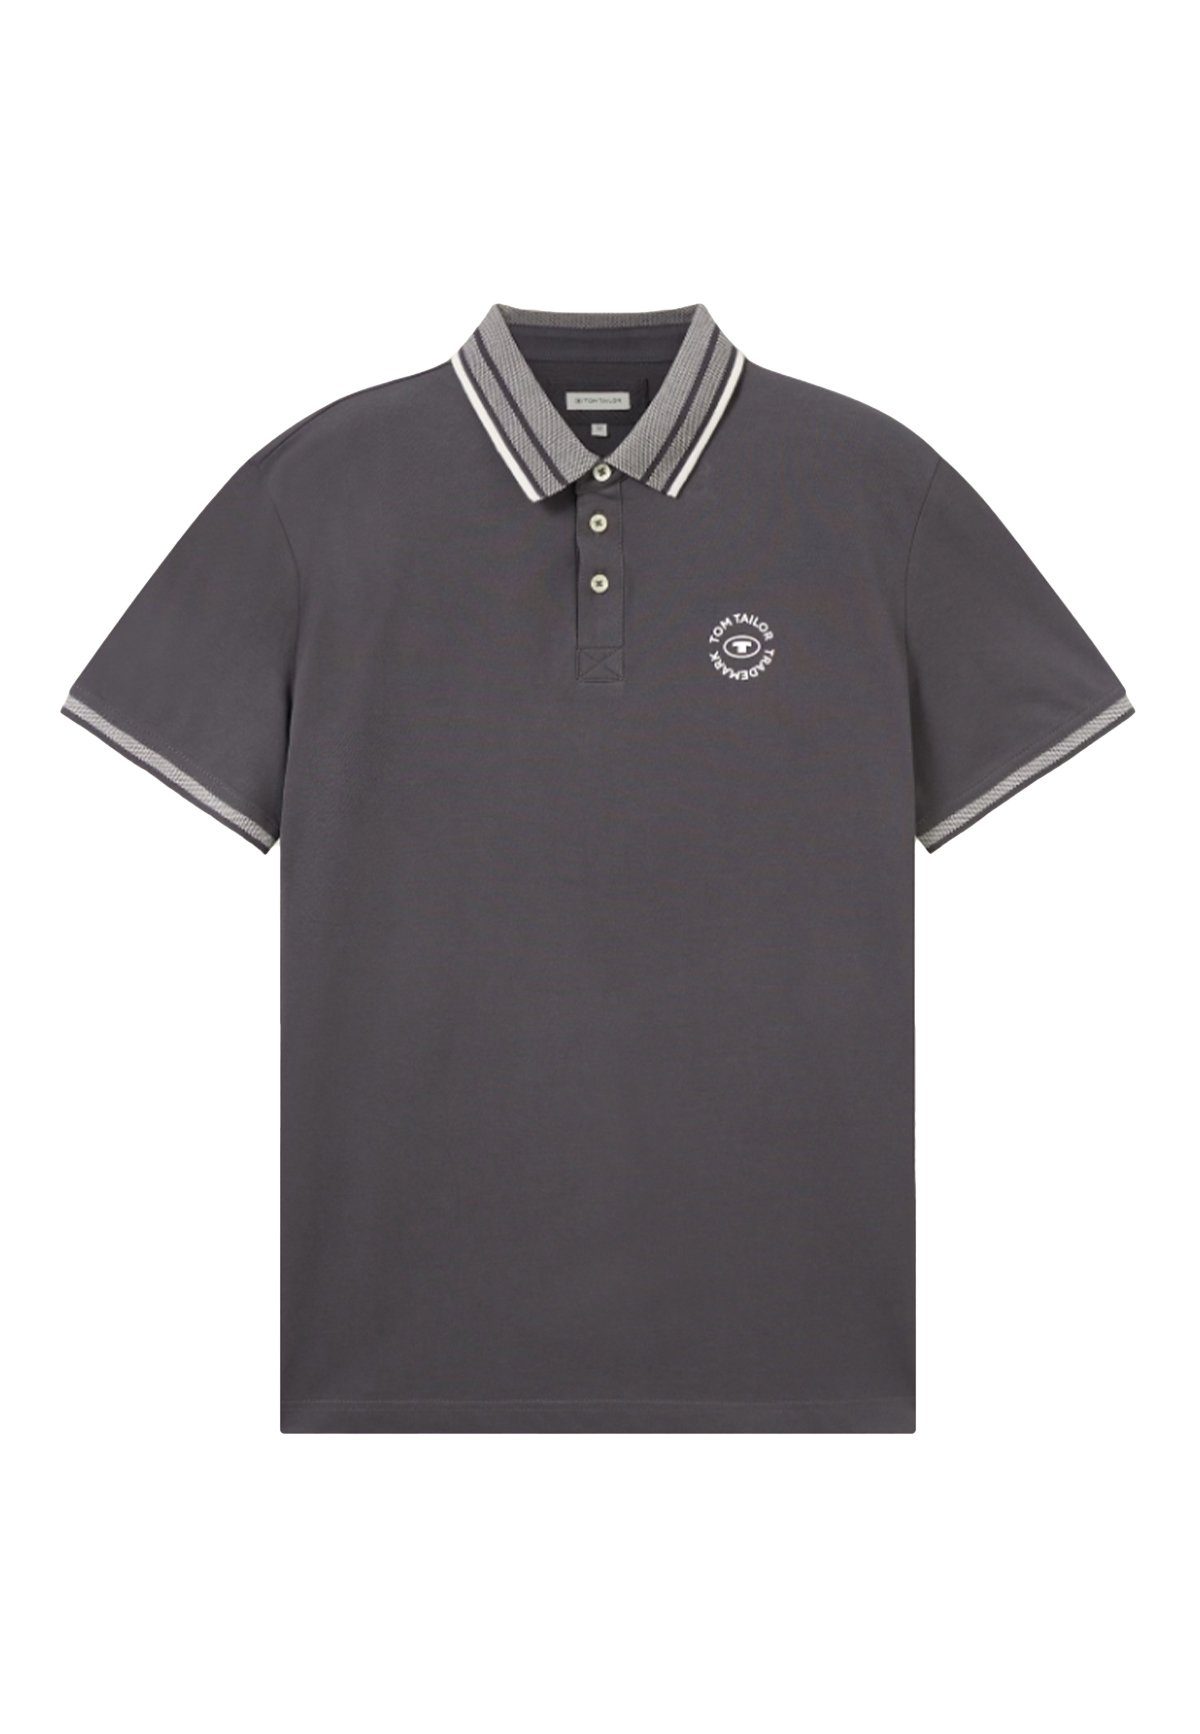 TOM 5312 BASIC mit Logoprägung TAILOR Poloshirt Shirt Dunkelgrau in POLO Polo